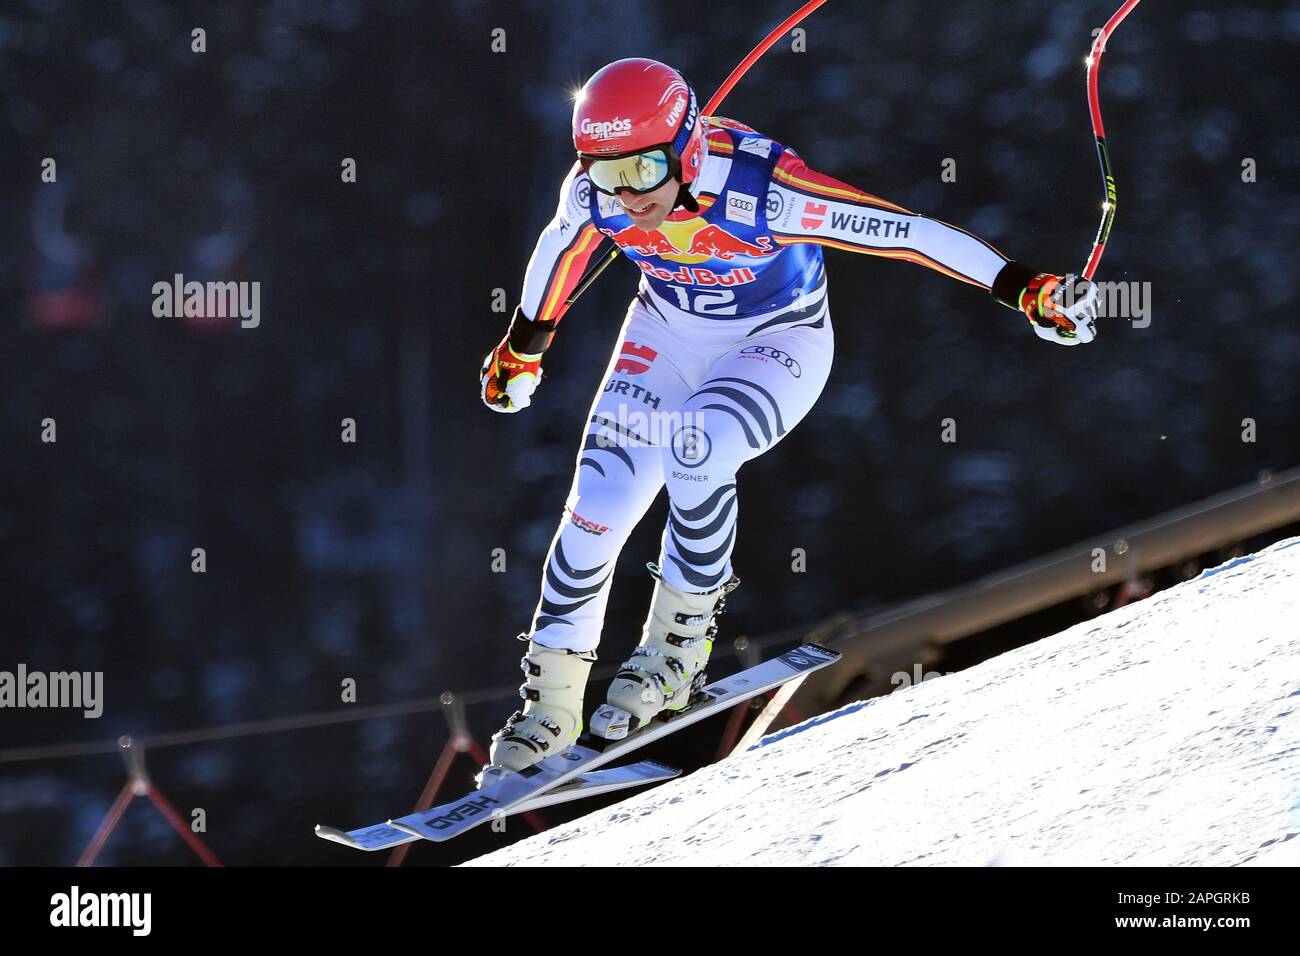 Josef FERSTL (GER), action, alpine skiing, training, 80. Hahnenkamm race 2020, Kitzbuehel, Hahnenkamm, Streif, departure, January 23, 2020 | usage worldwide Stock Photo